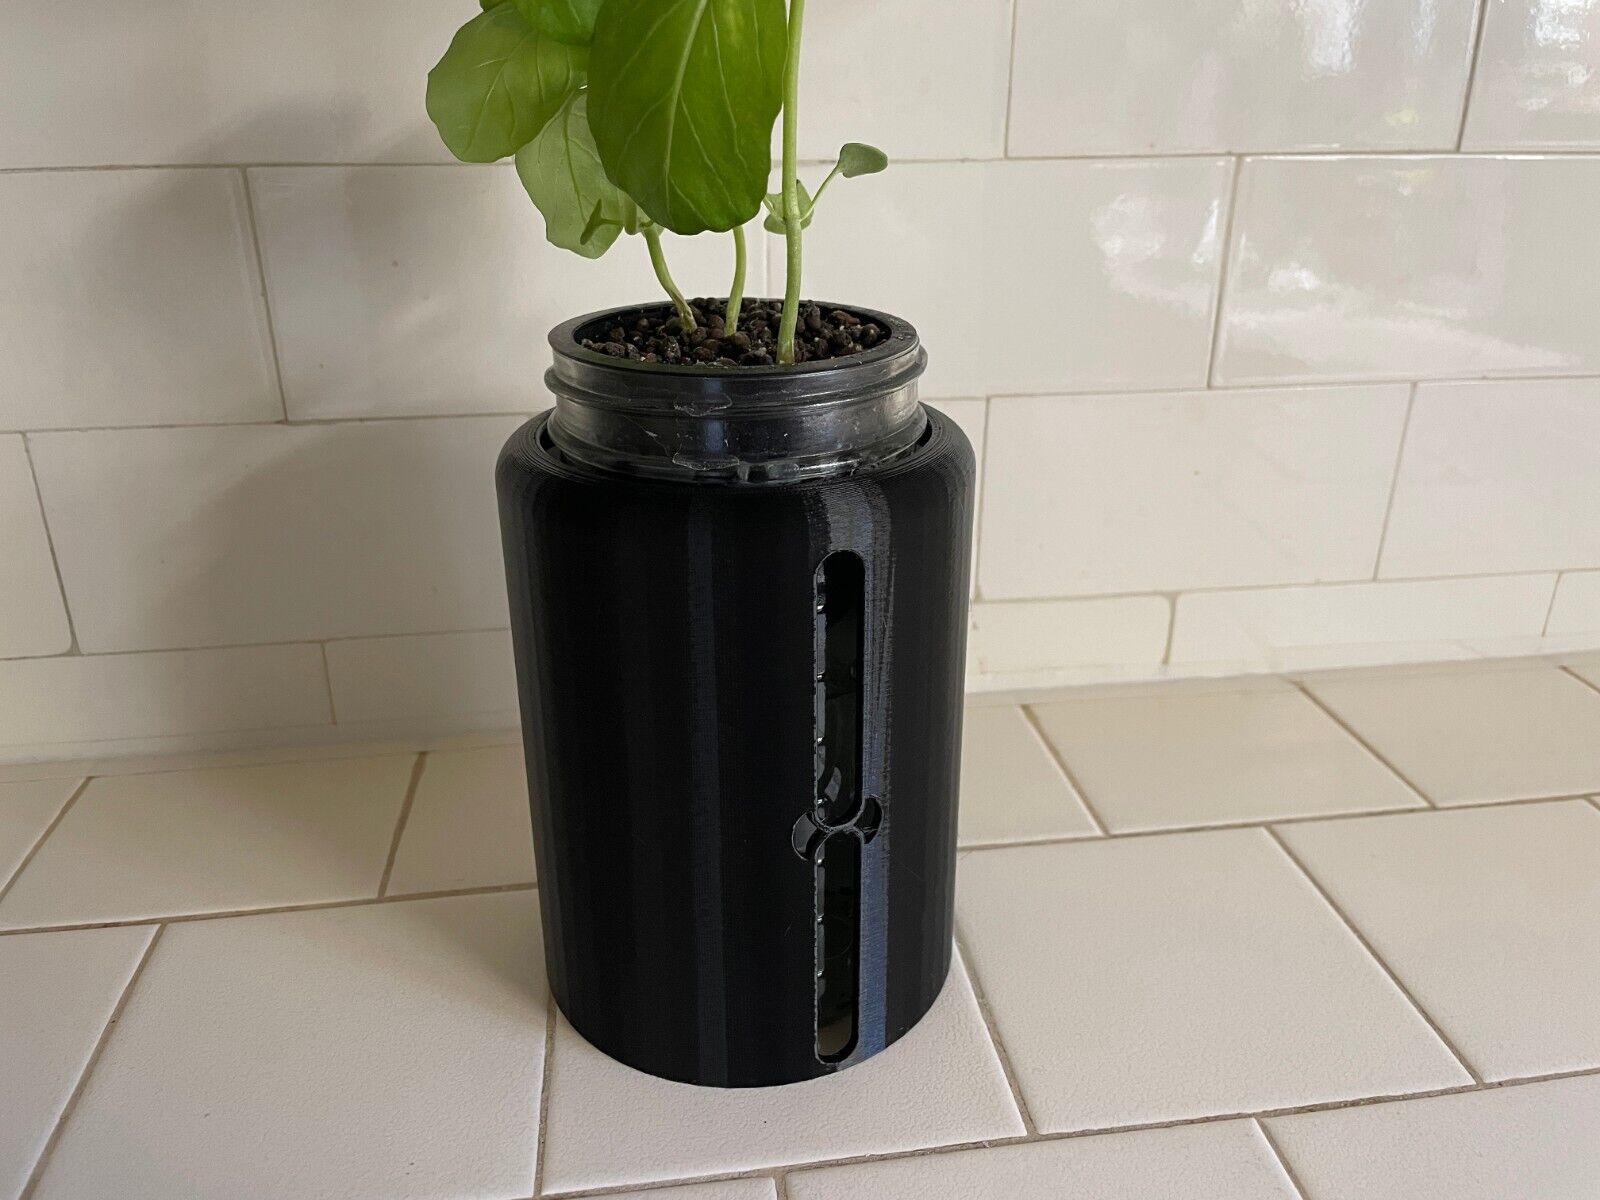 Kratky Jar Sleeve—Indoor Mason Jar Hydroponics